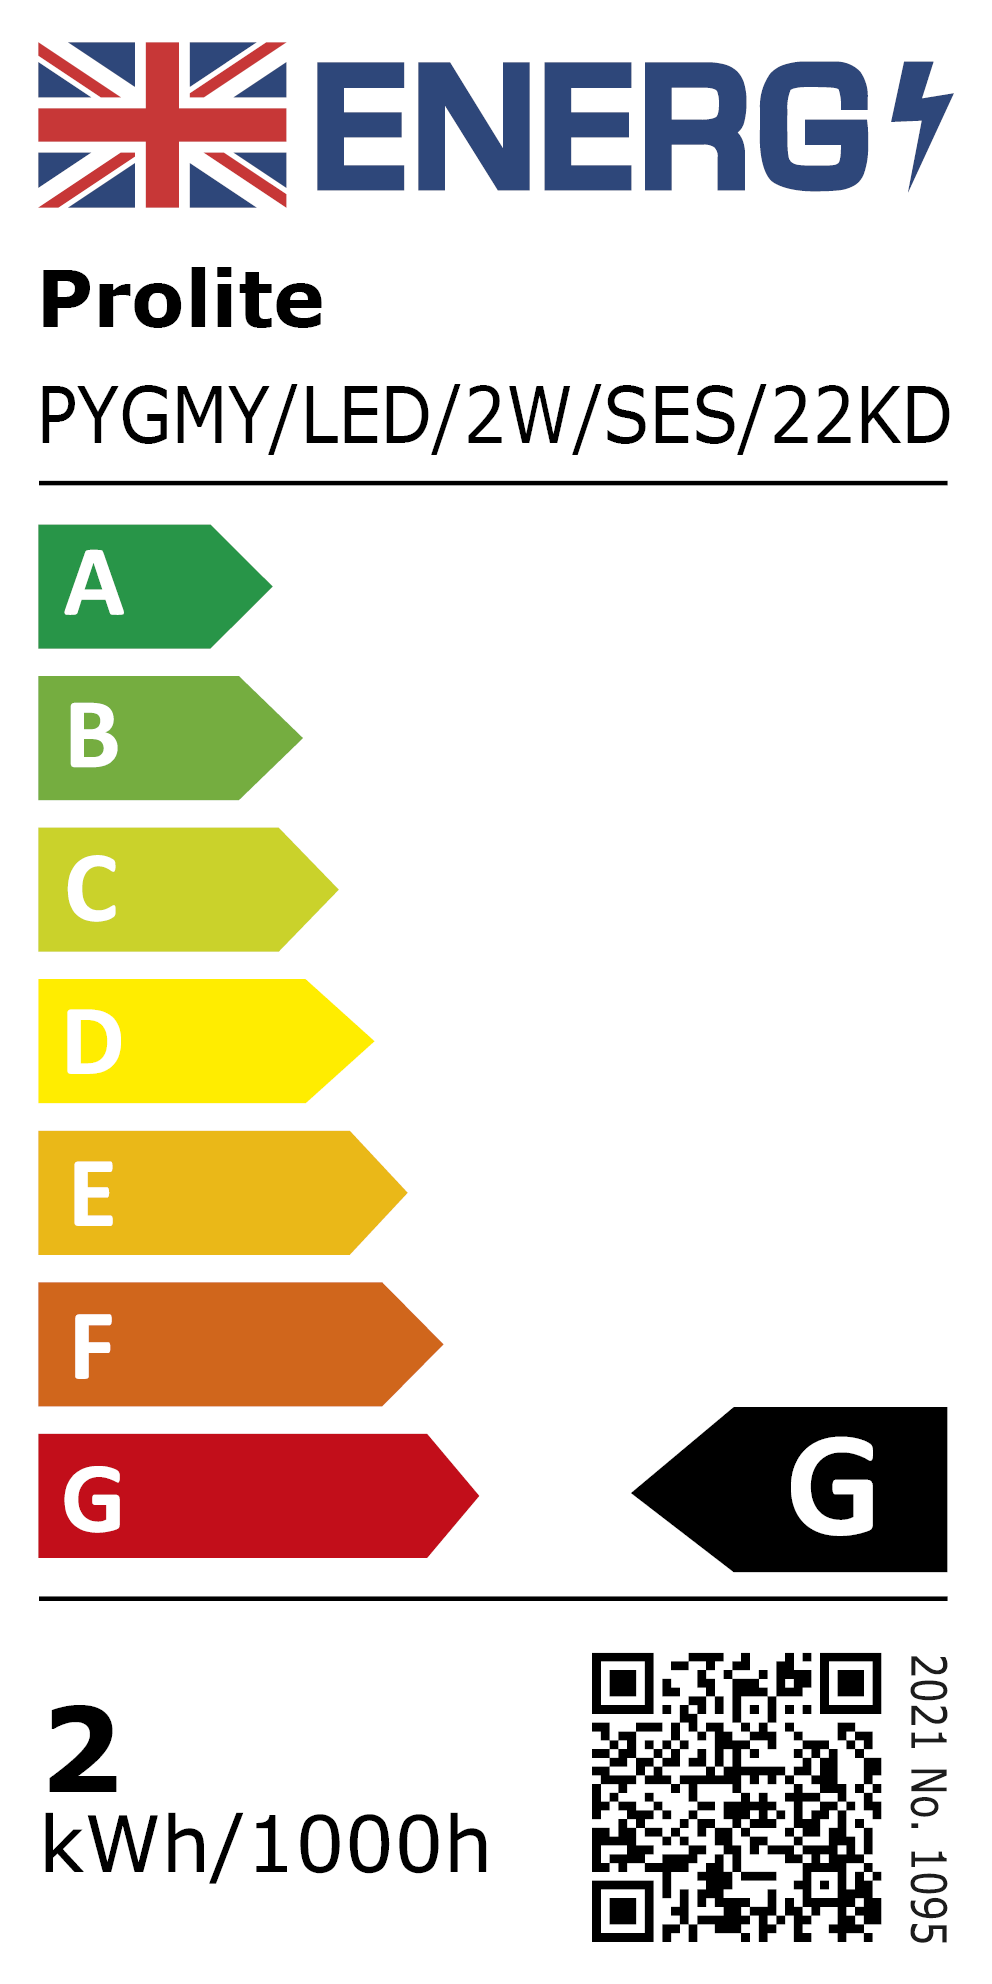 New 2021 Energy Rating Label: MPN PYGMY/LED/2W/SES/22KD